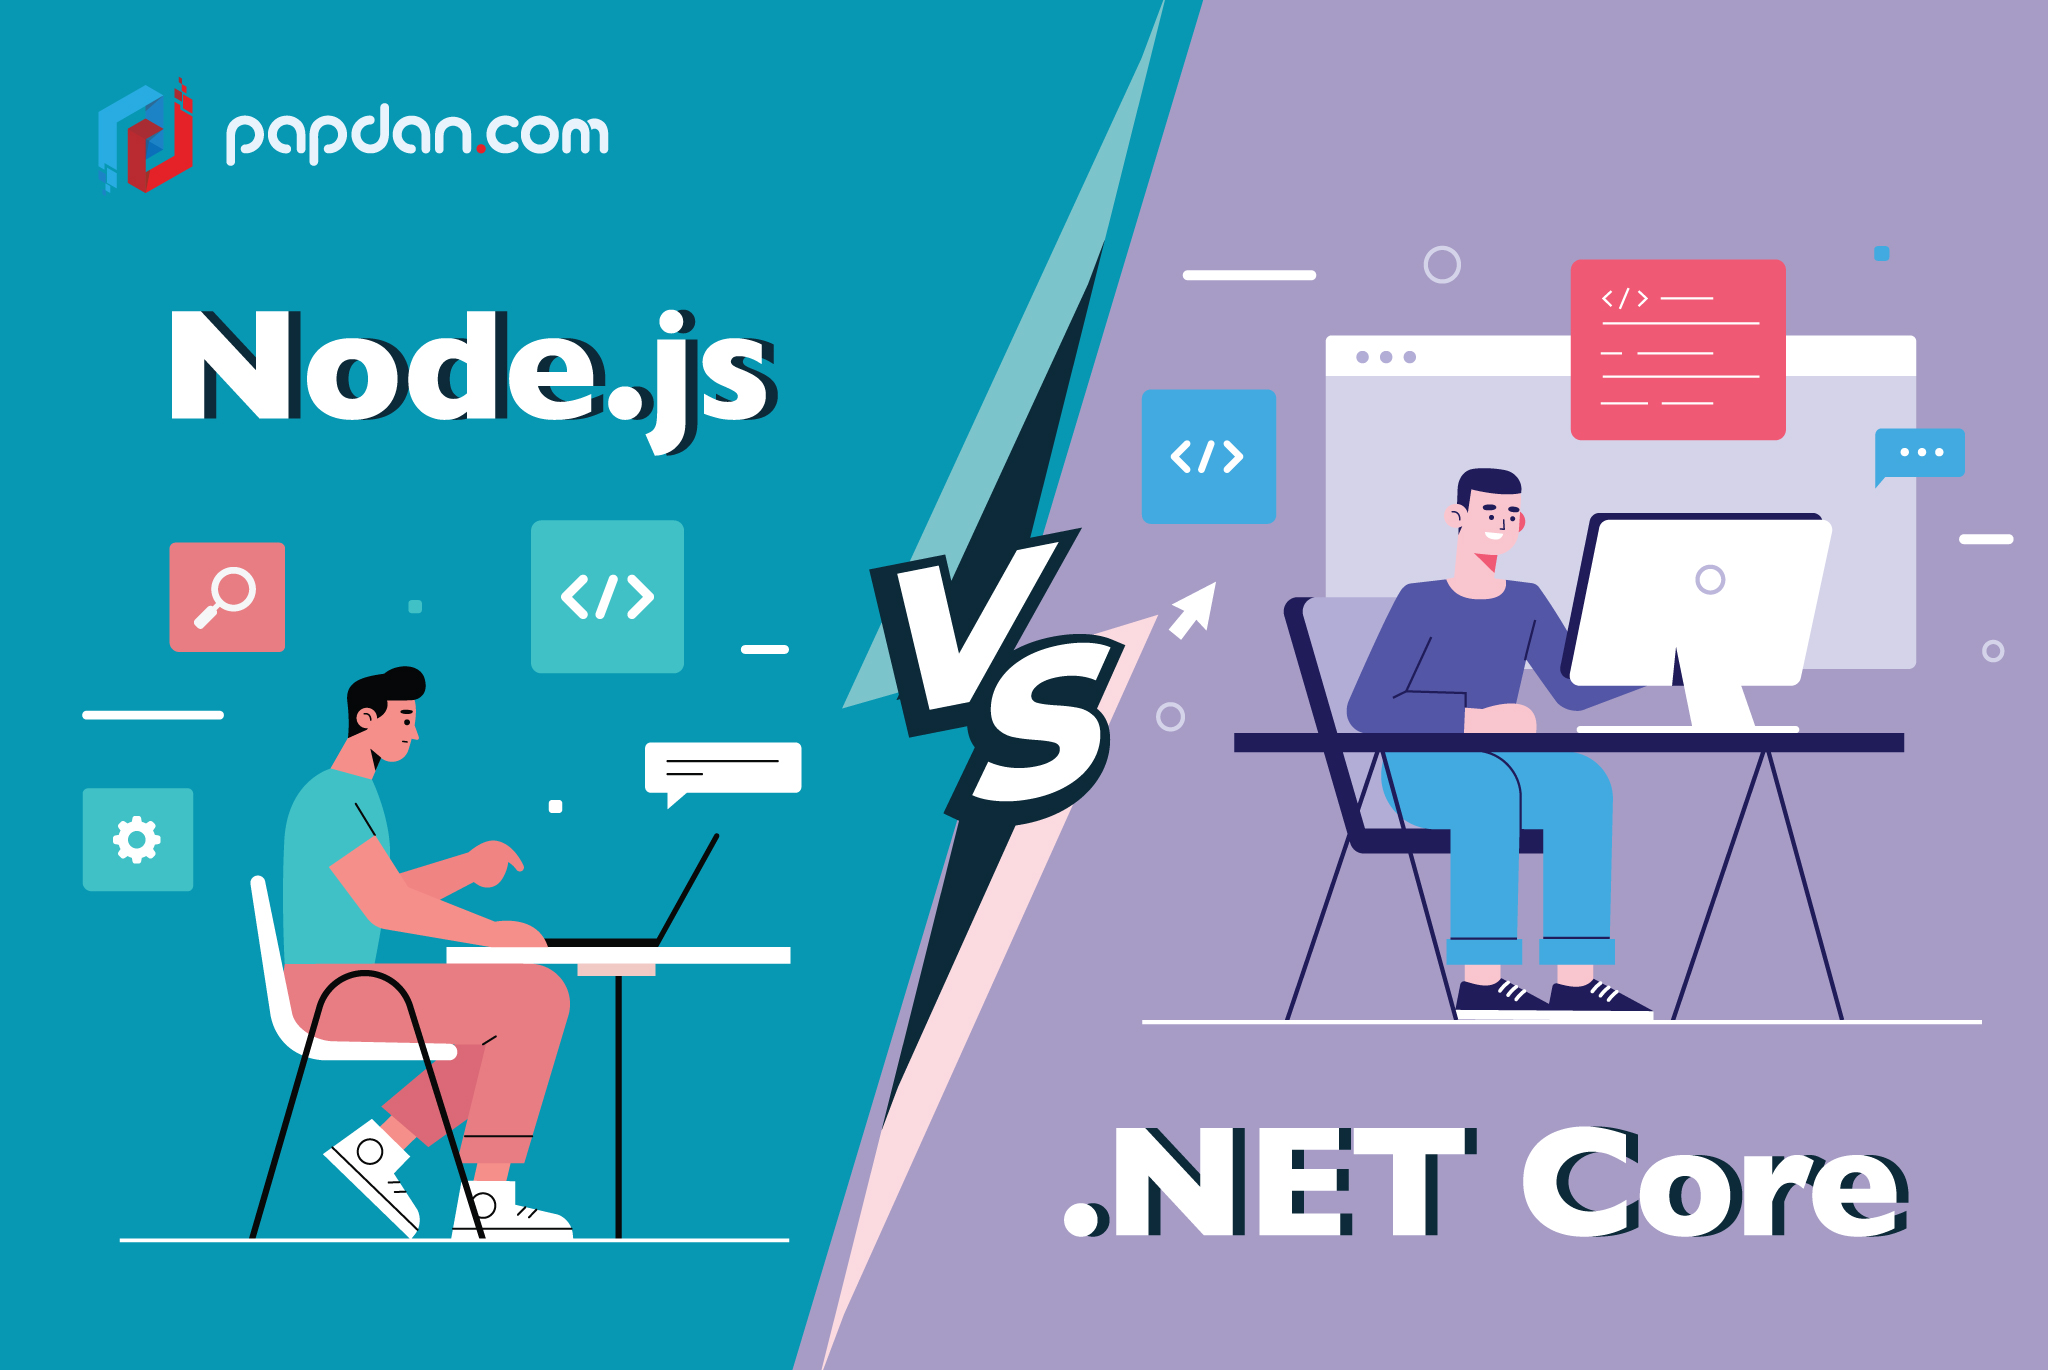 .NET Core vs Node.js